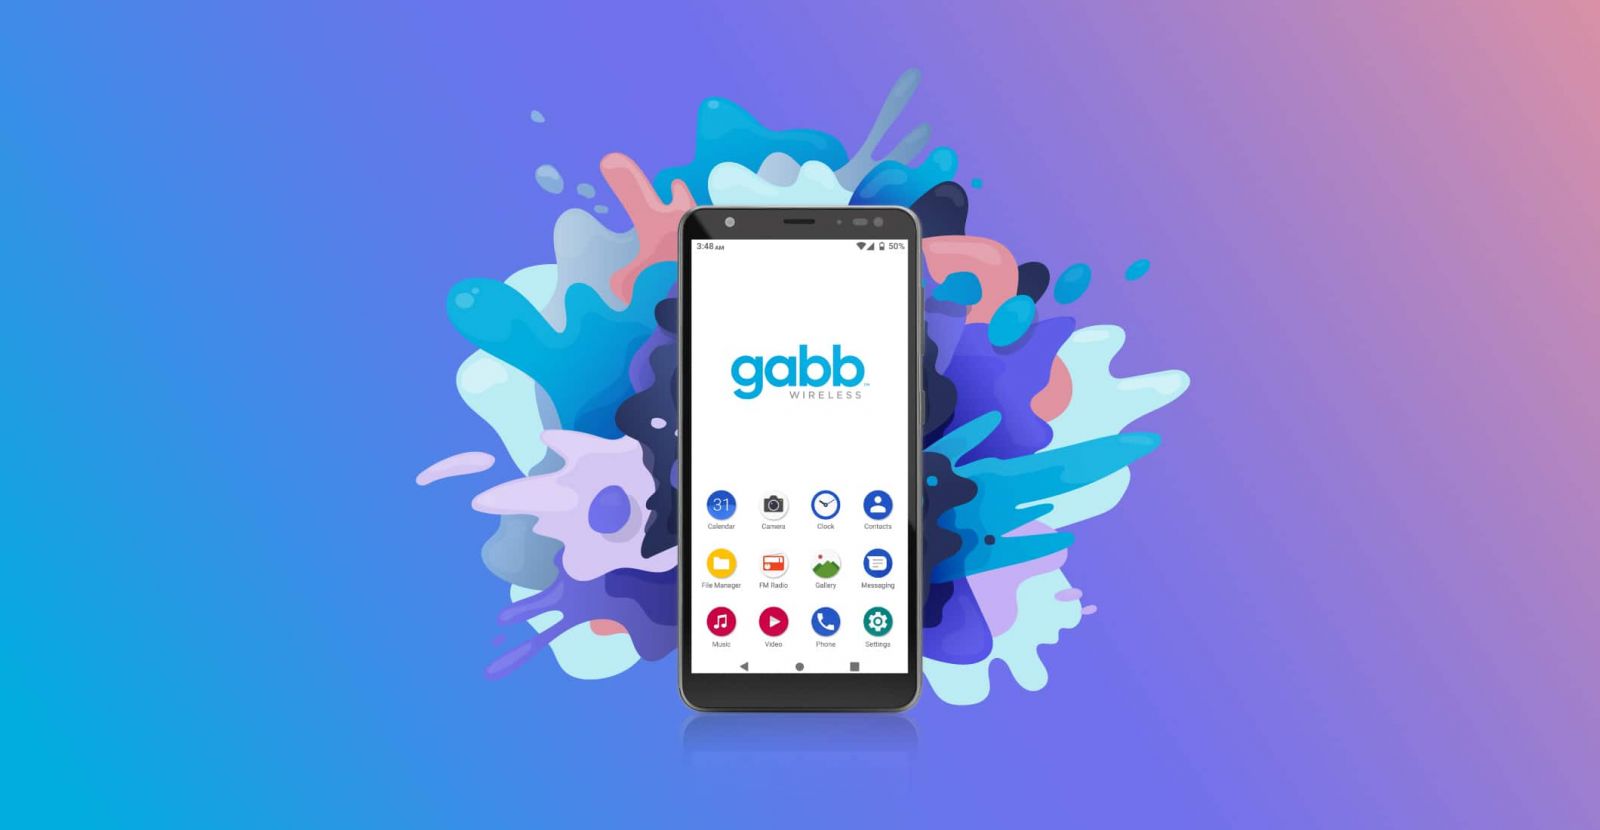 gabb-wireless-promo